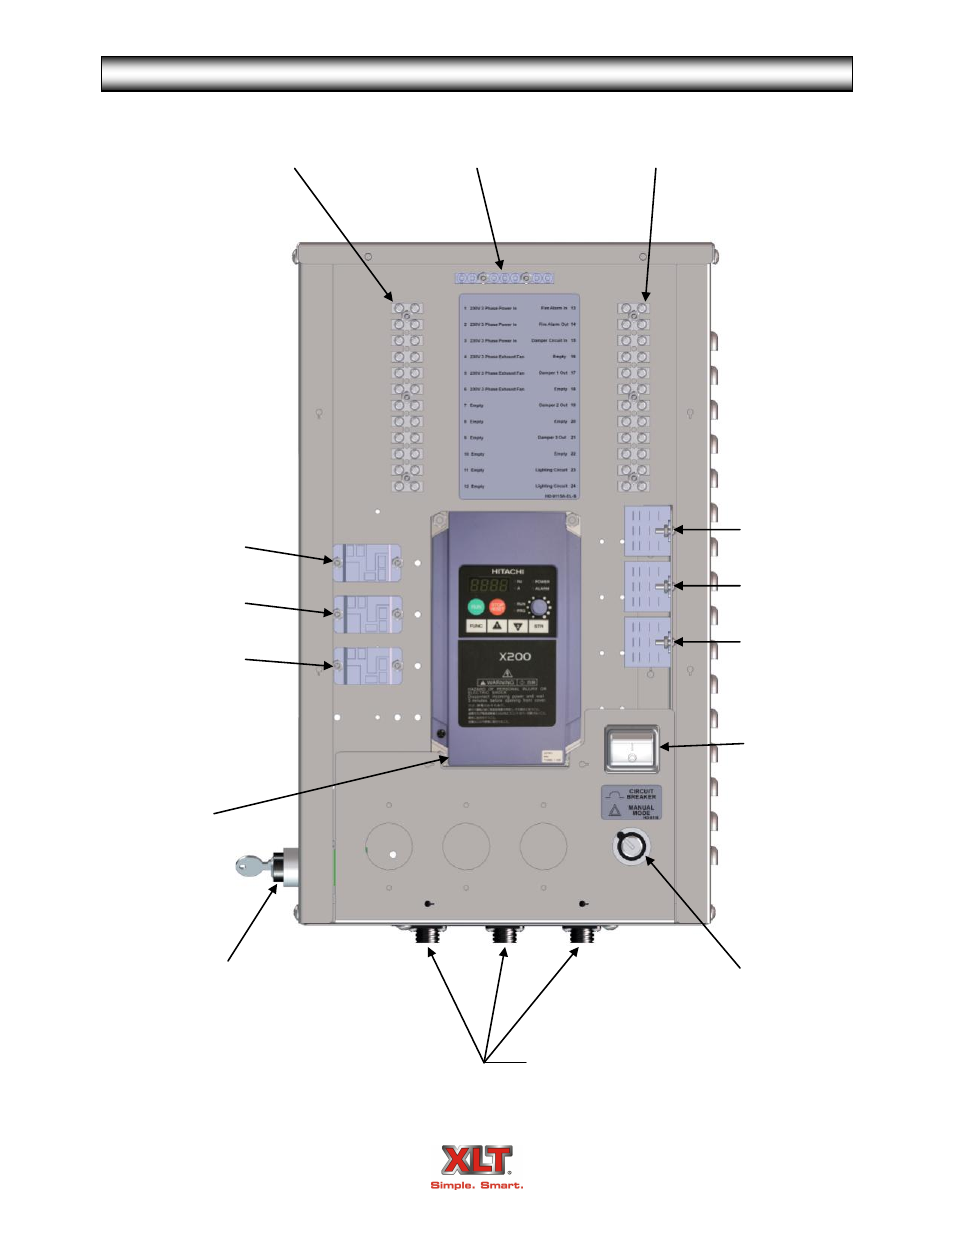 Avi hood electrical description, Vfd control box - standard | XLT XD-9005A User Manual | Page 39 / 100